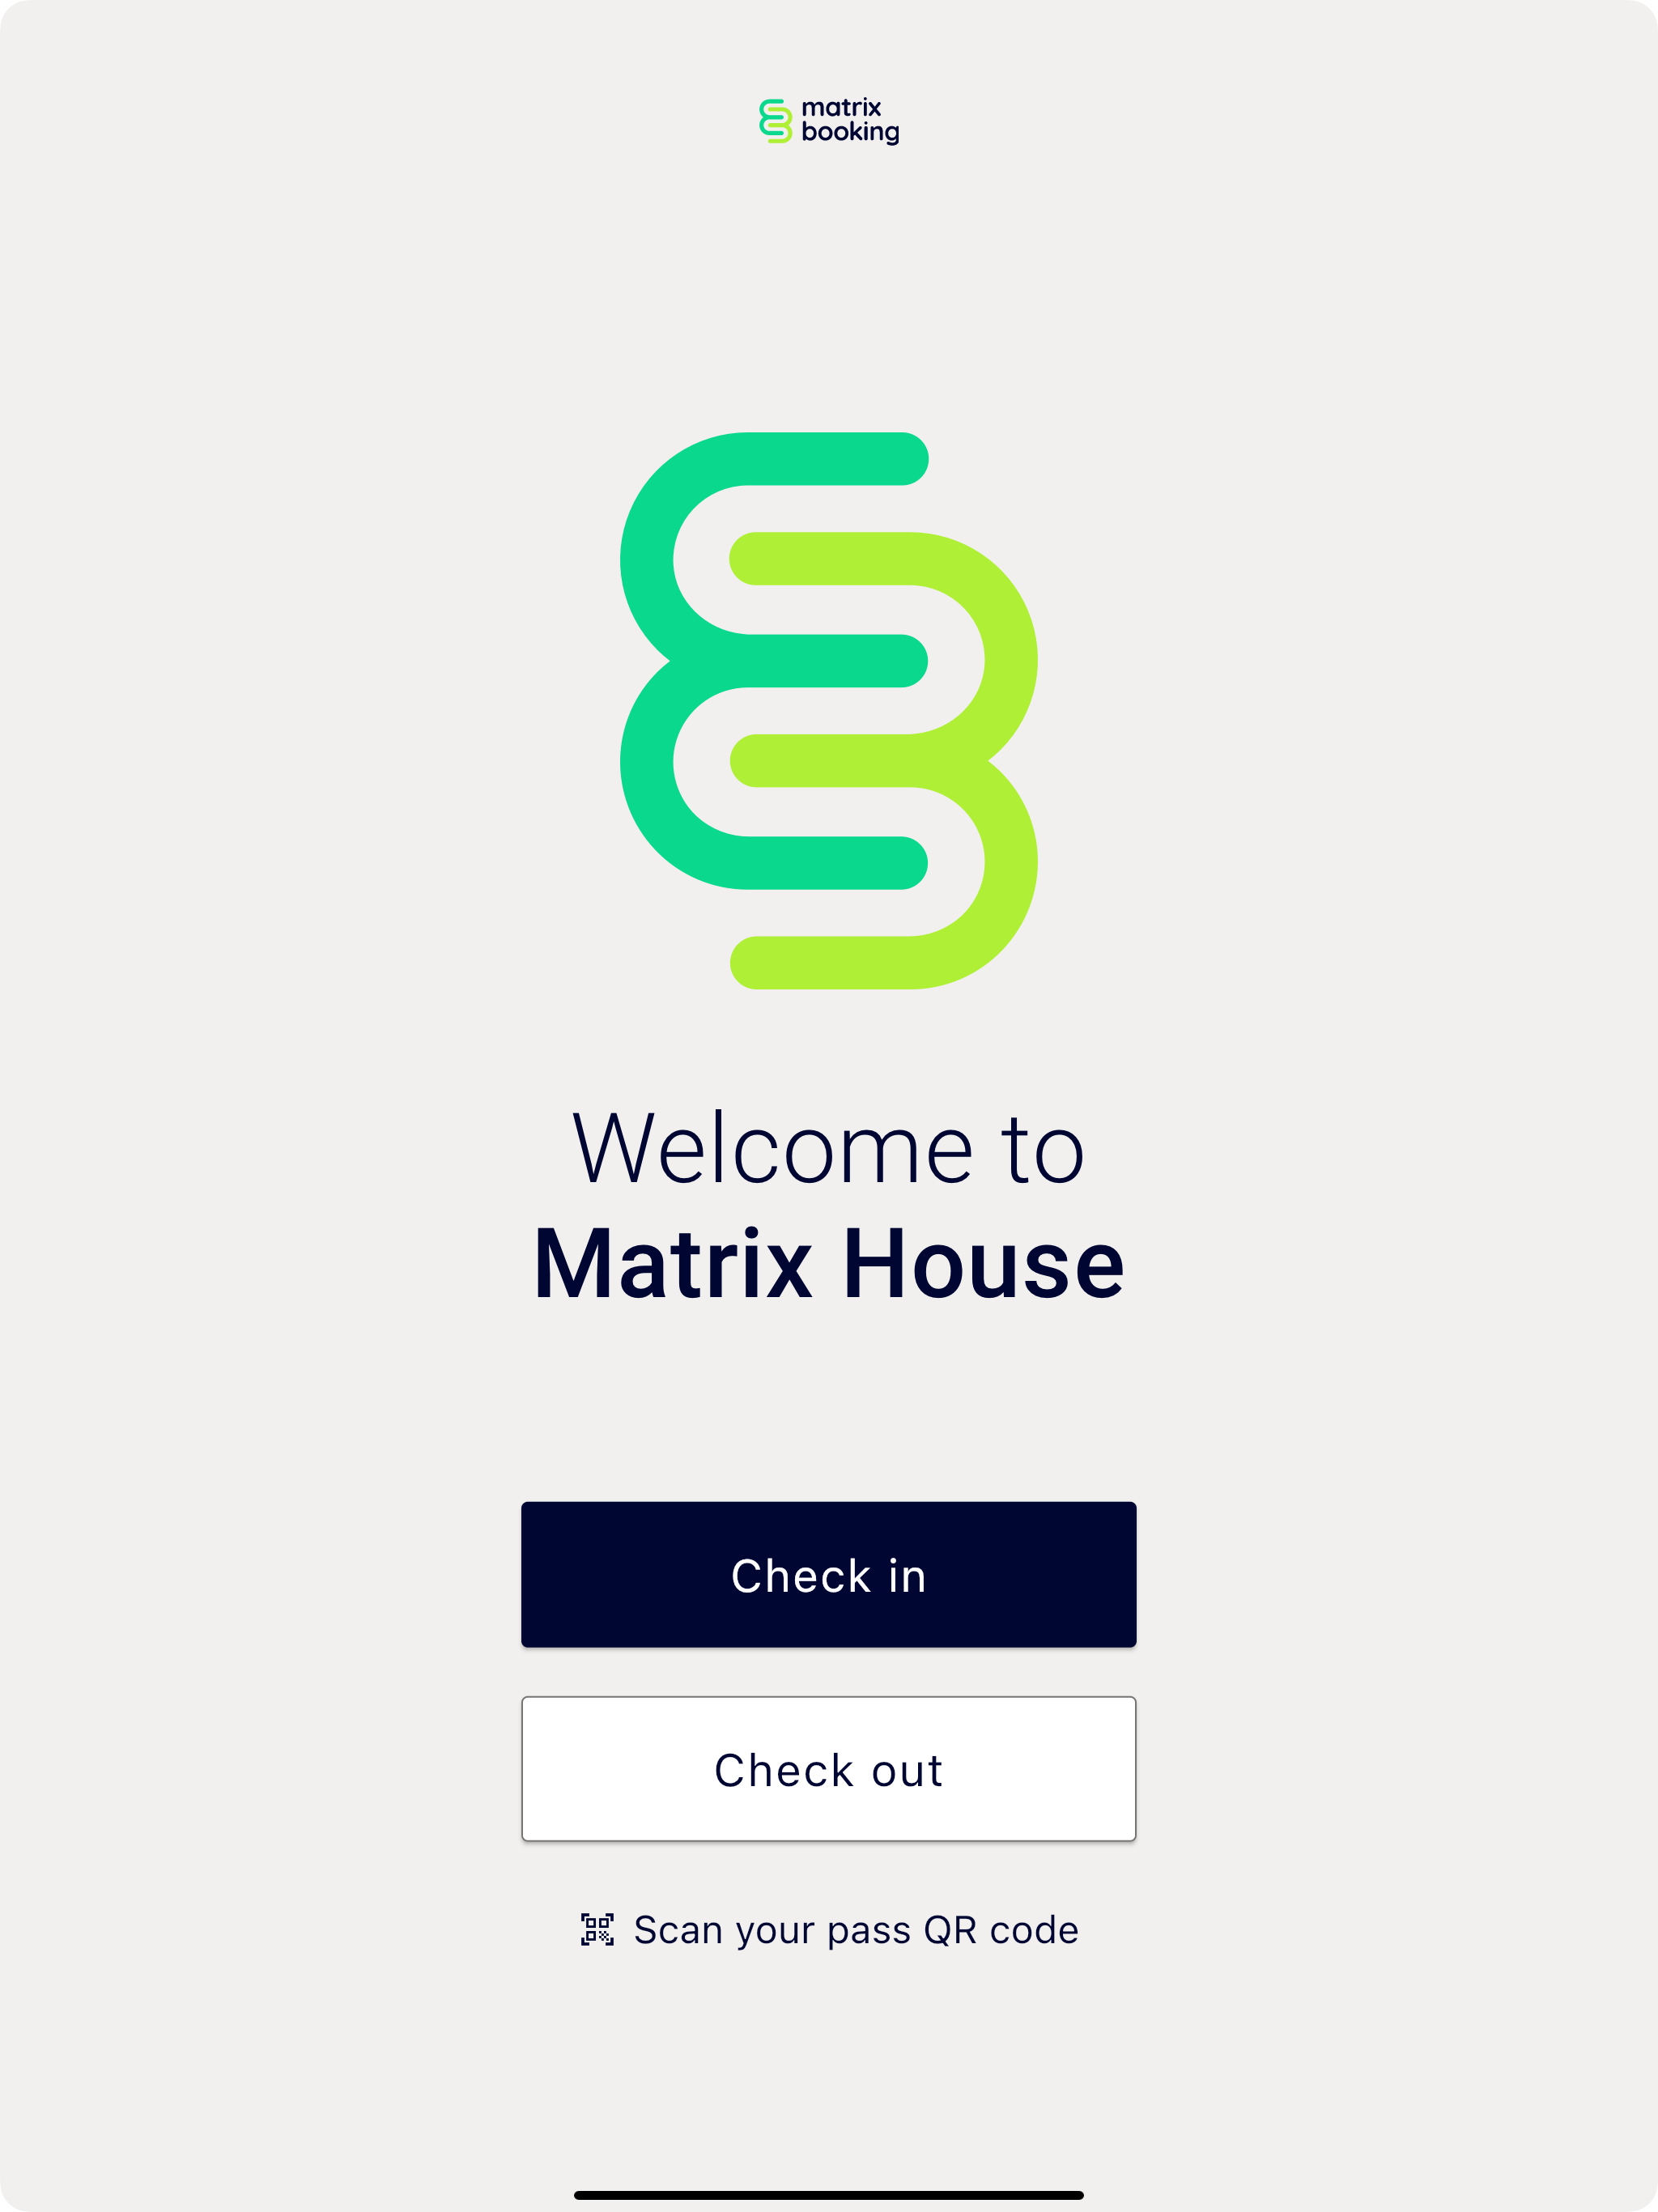 Matrix Booking visitor management system